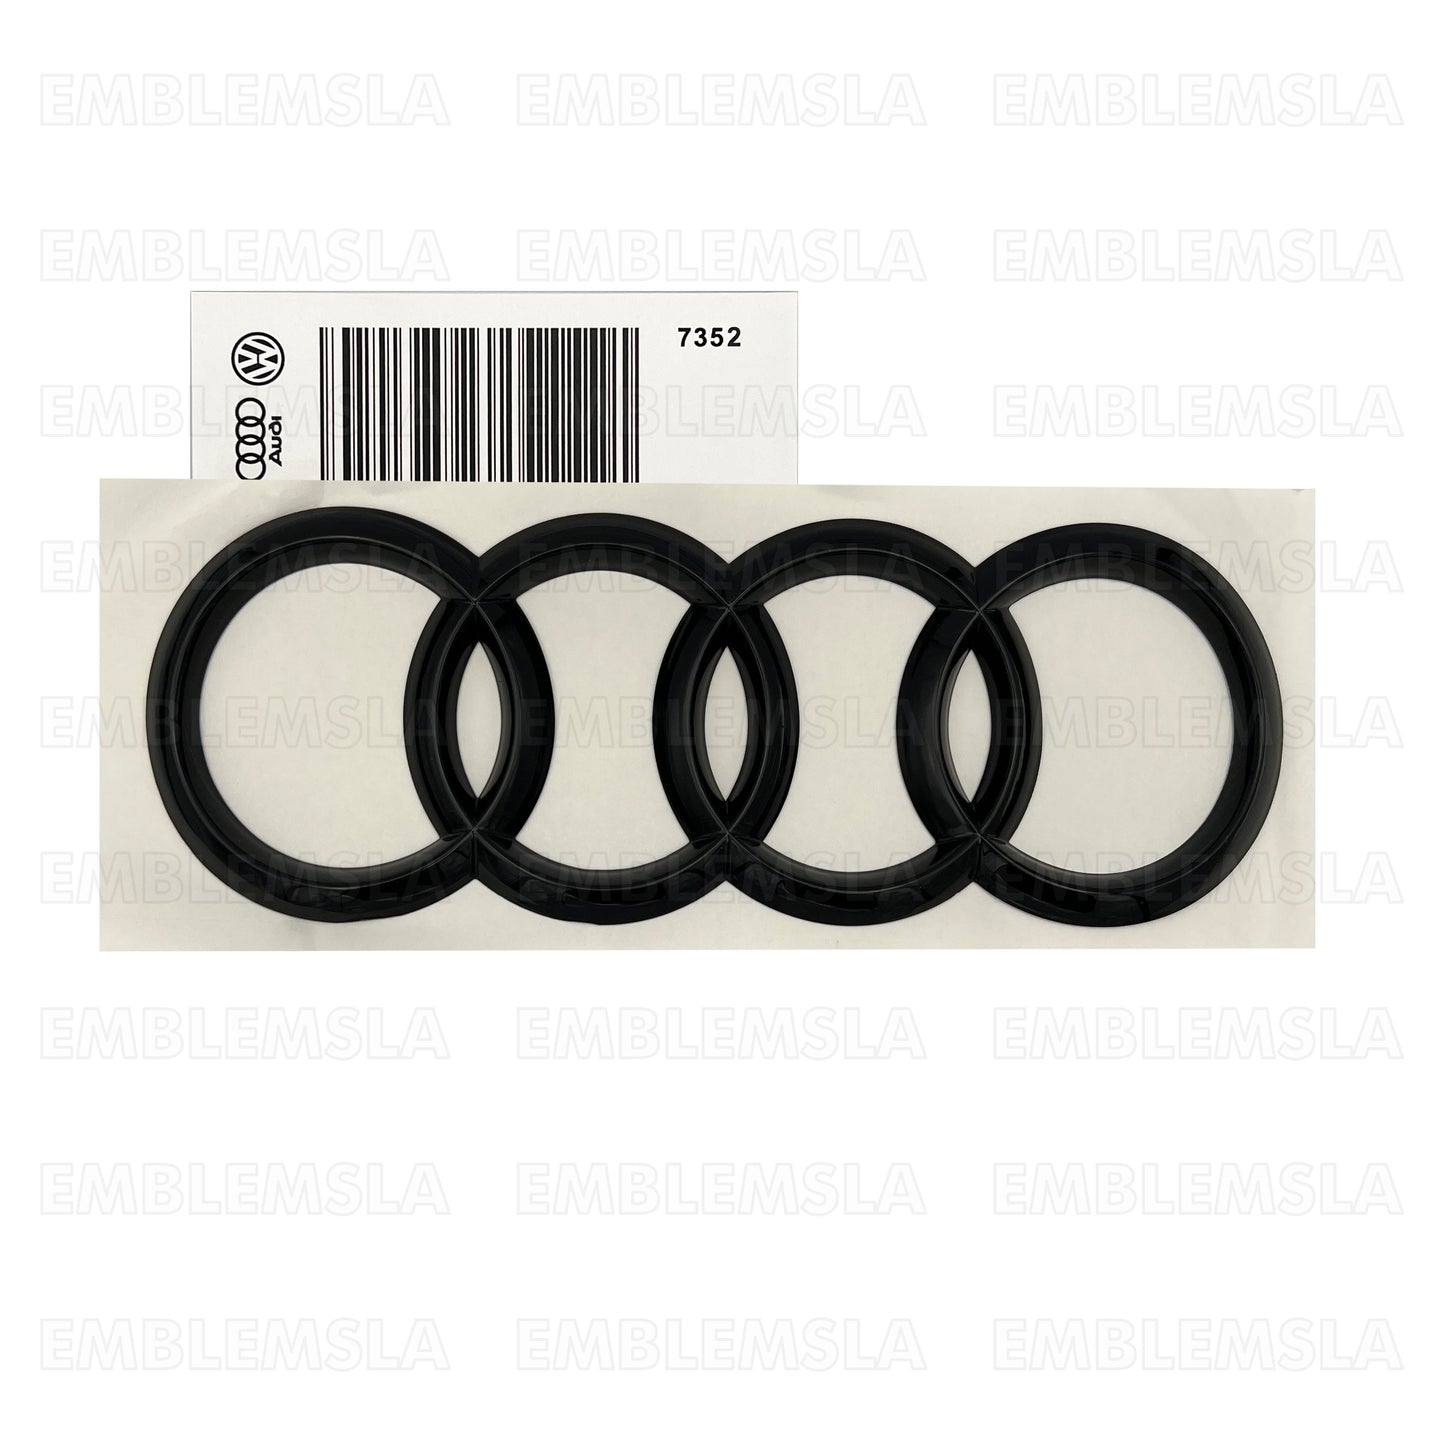 Audi Matte Black Rings Trunk Liftgate Emblem Rear Logo Badge for Q3 Q5 SQ5 Q7 A6 216mm